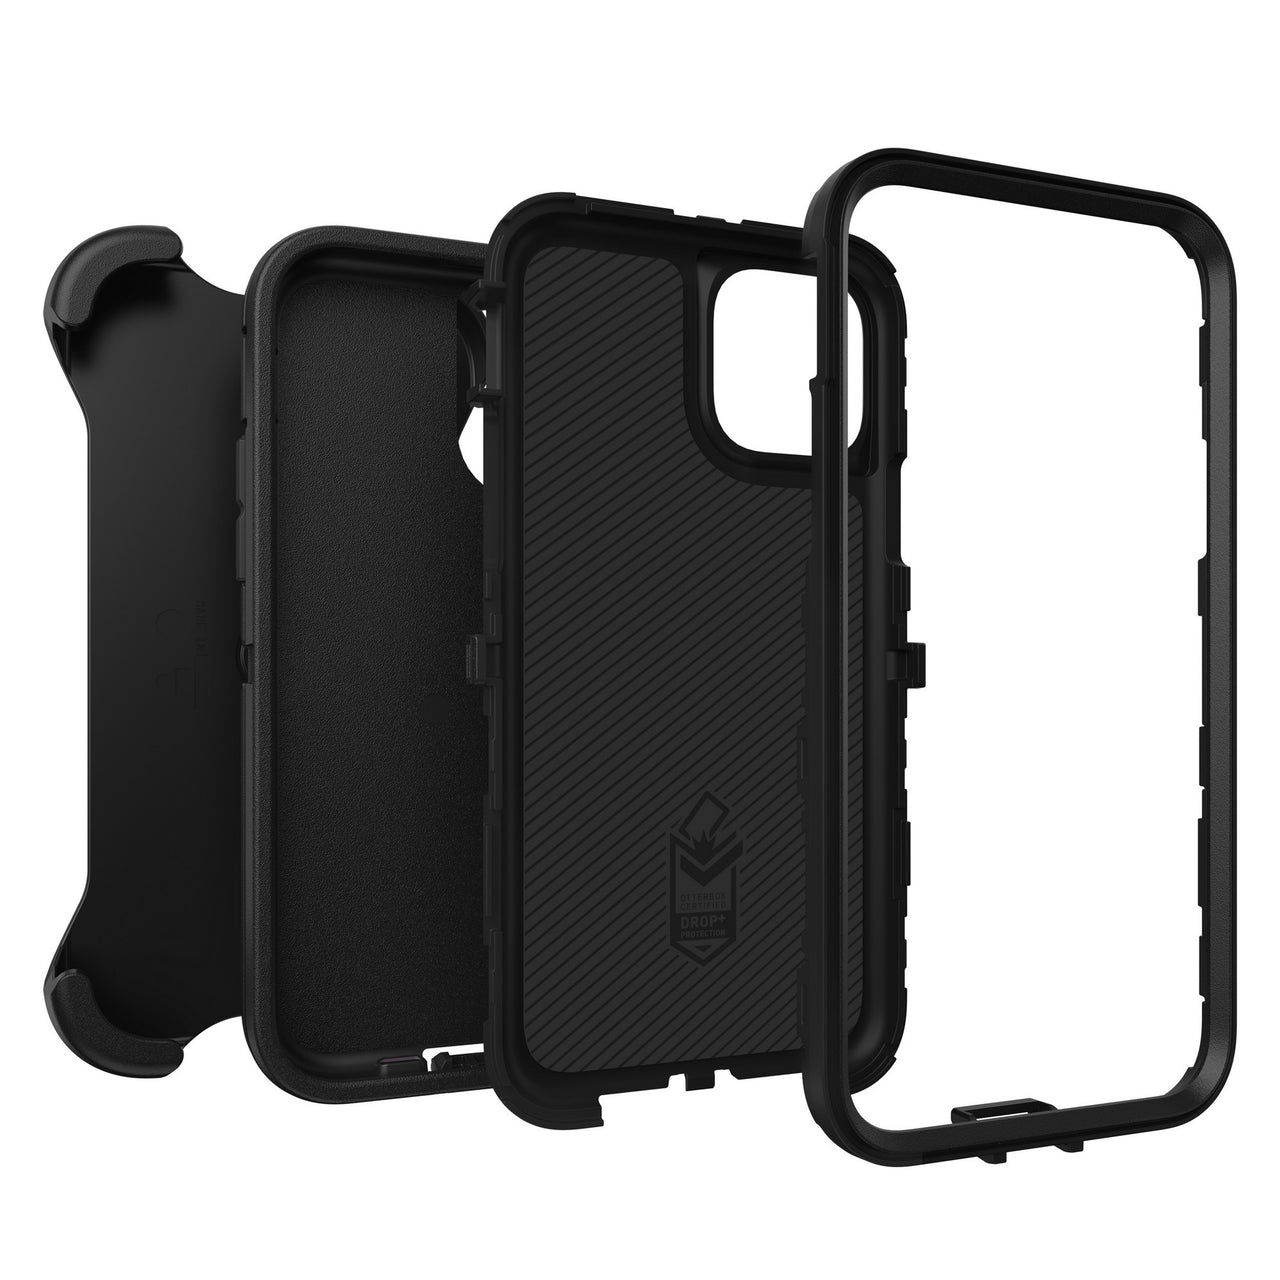 Otterbox Defender Case Suits Iphone 11 Pro - Black